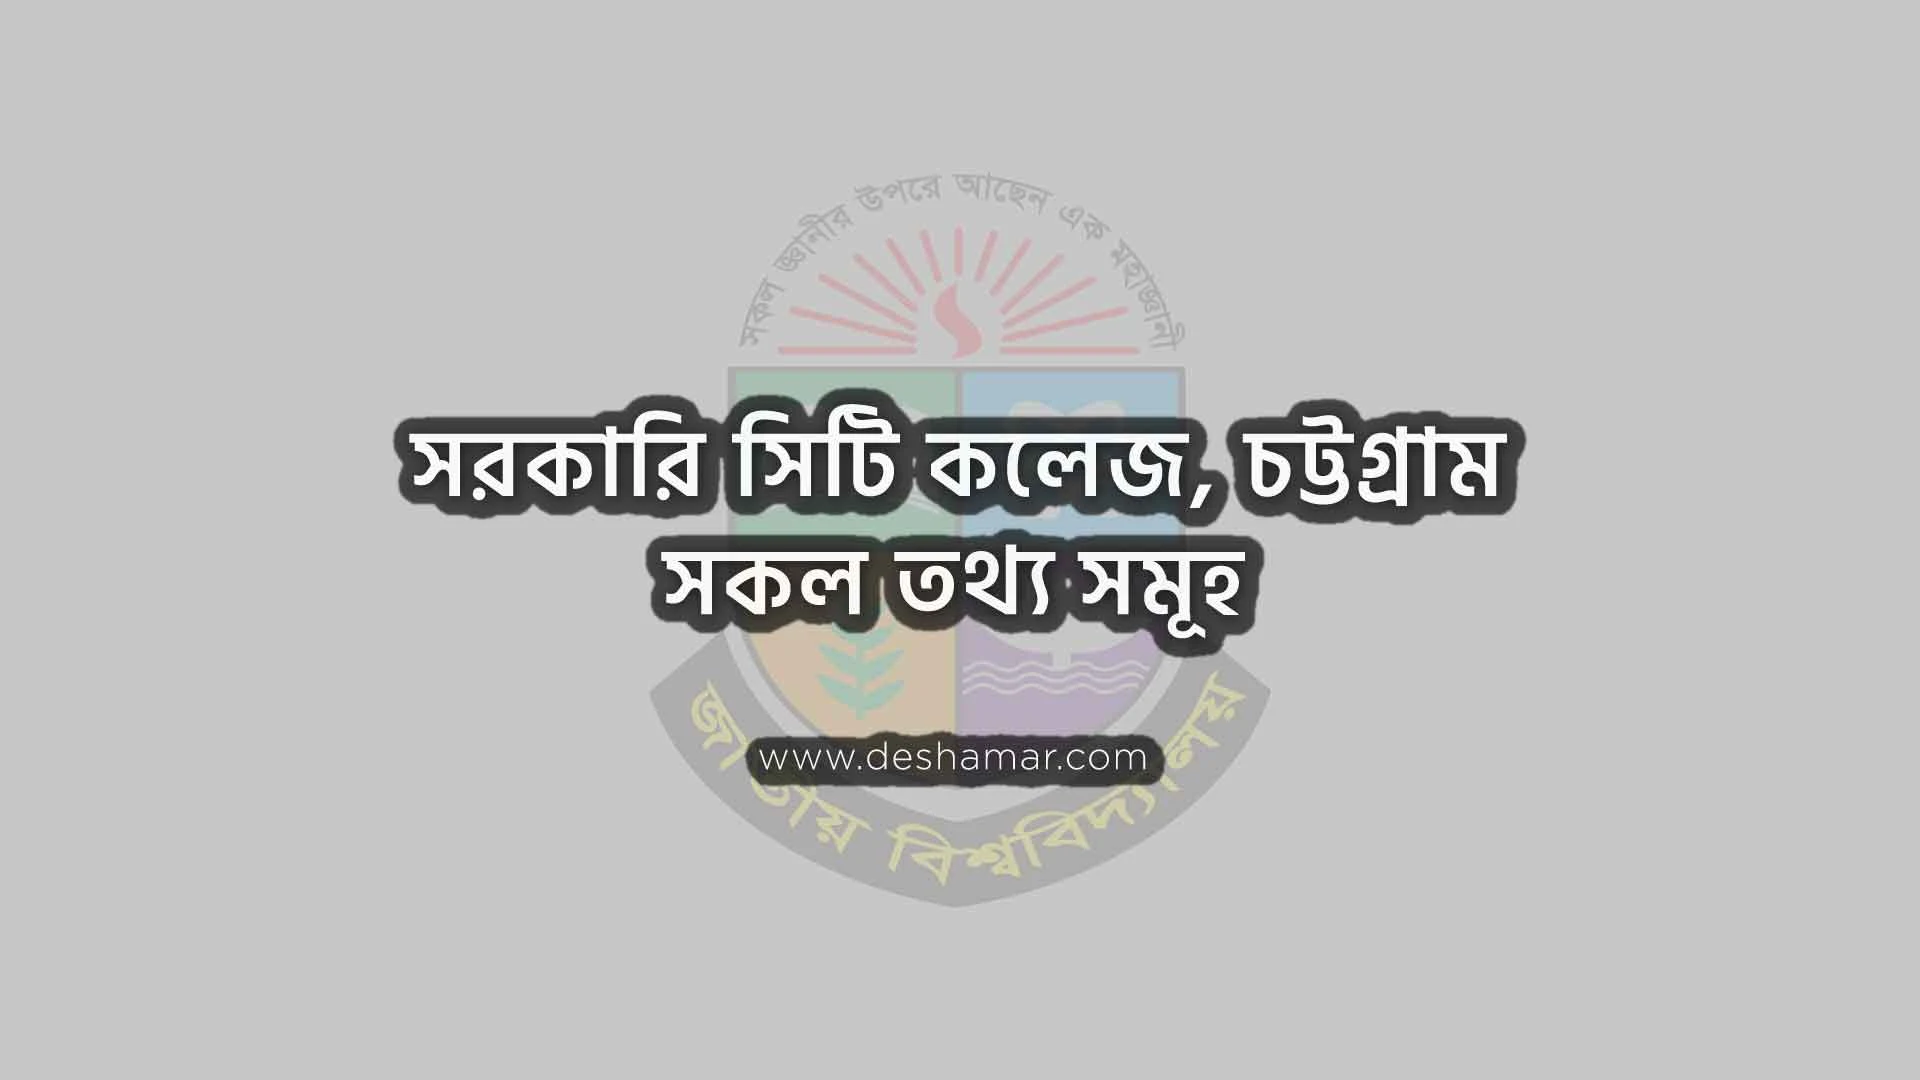 Govt-City-College-Chittagong-Info